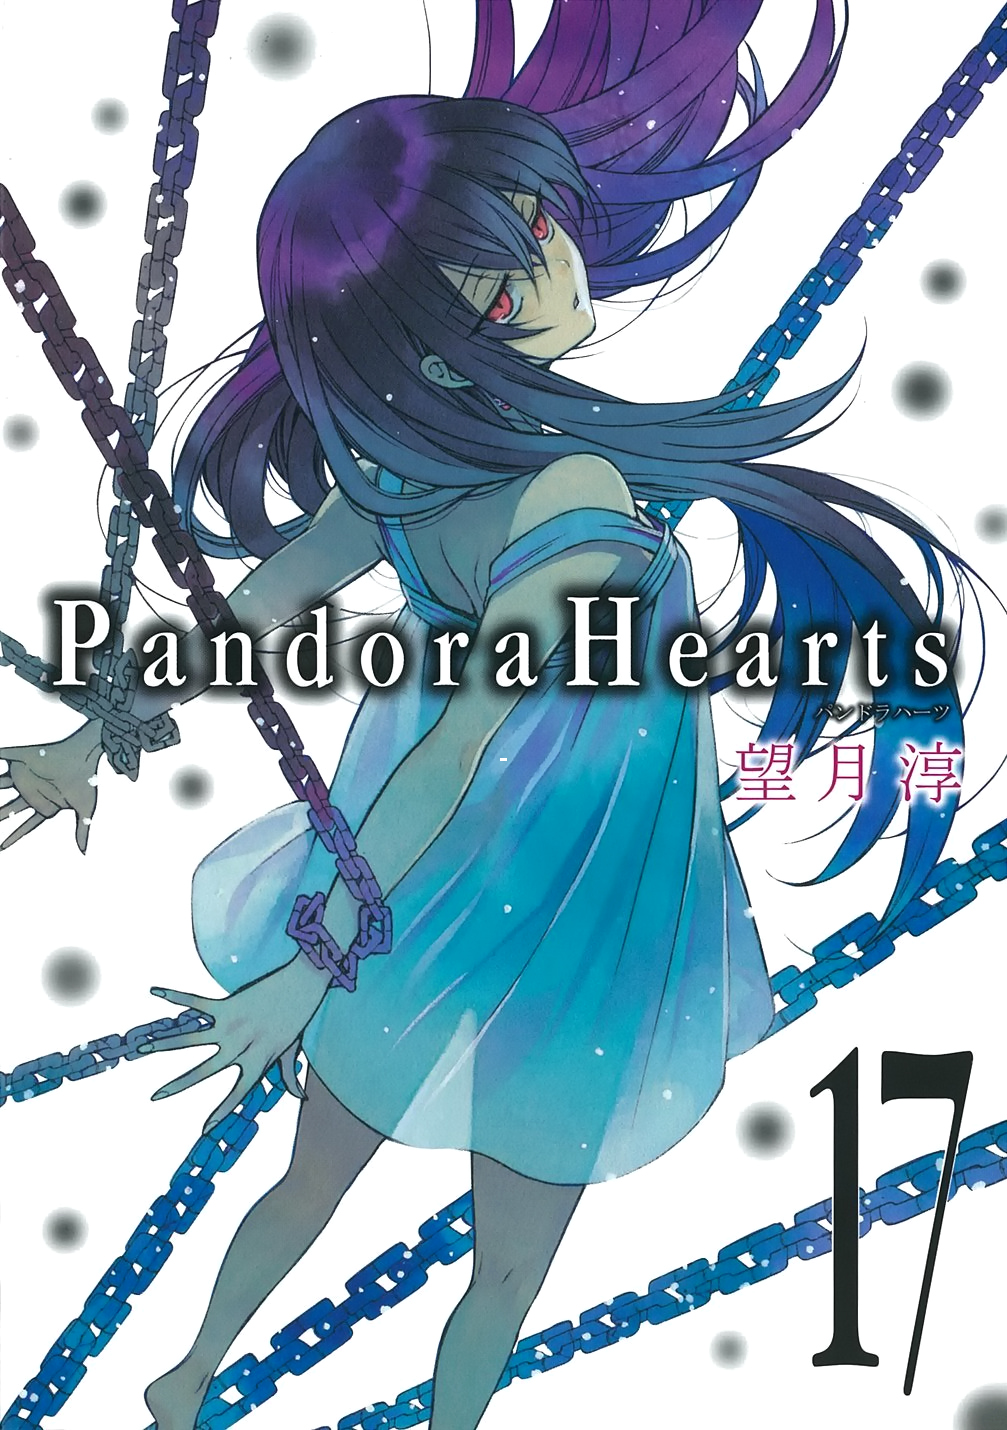 pandora hearts 1280x720 x264 23